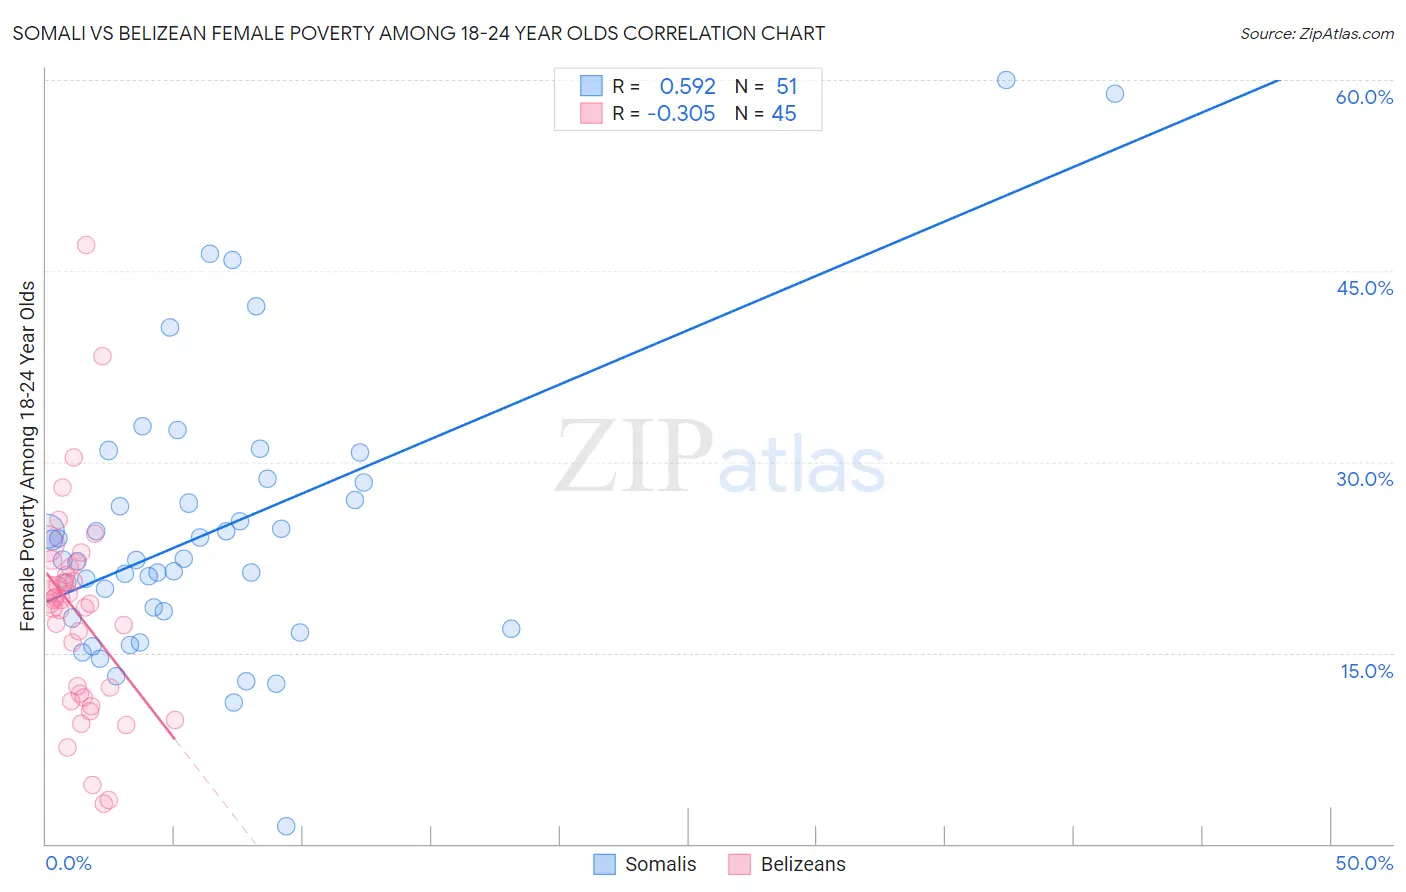 Somali vs Belizean Female Poverty Among 18-24 Year Olds